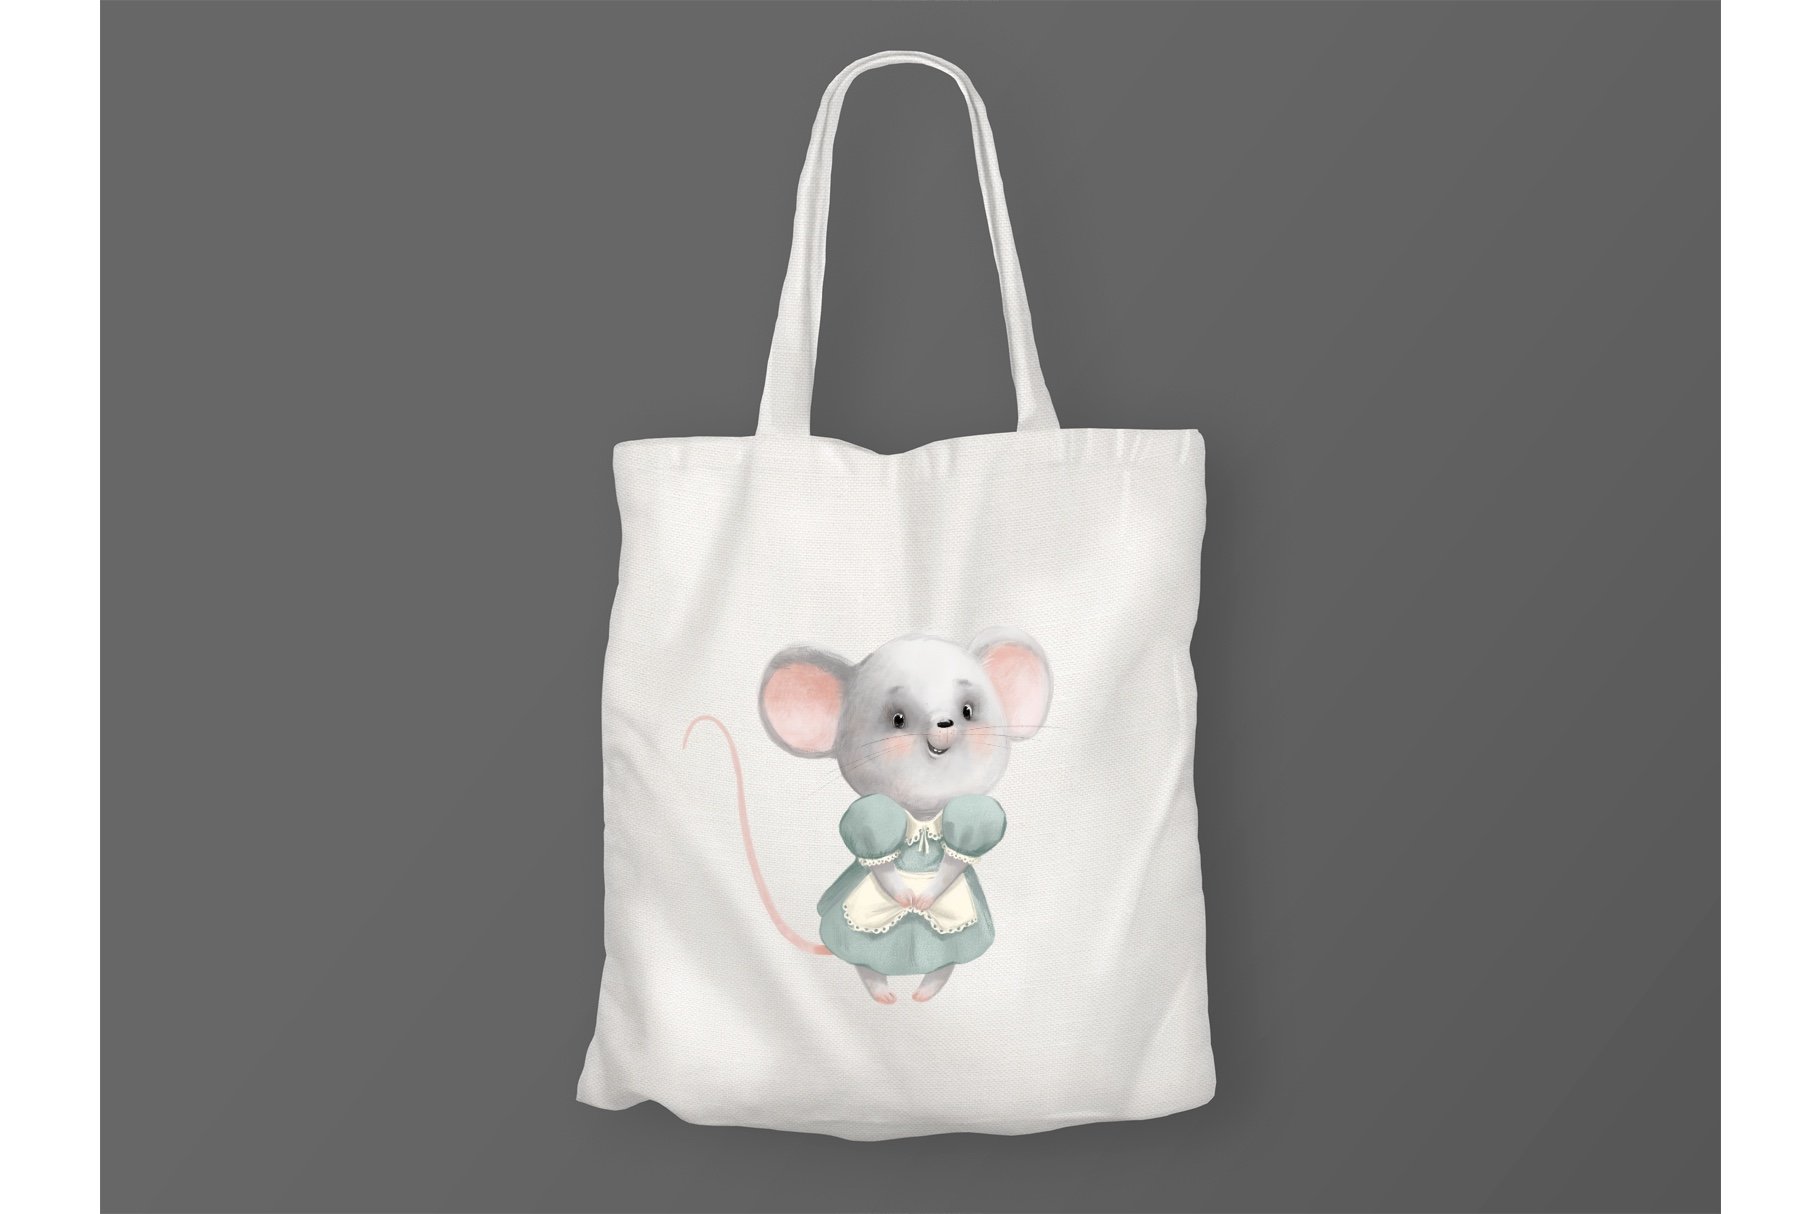 Pastel mouse illustration on an eco bag.